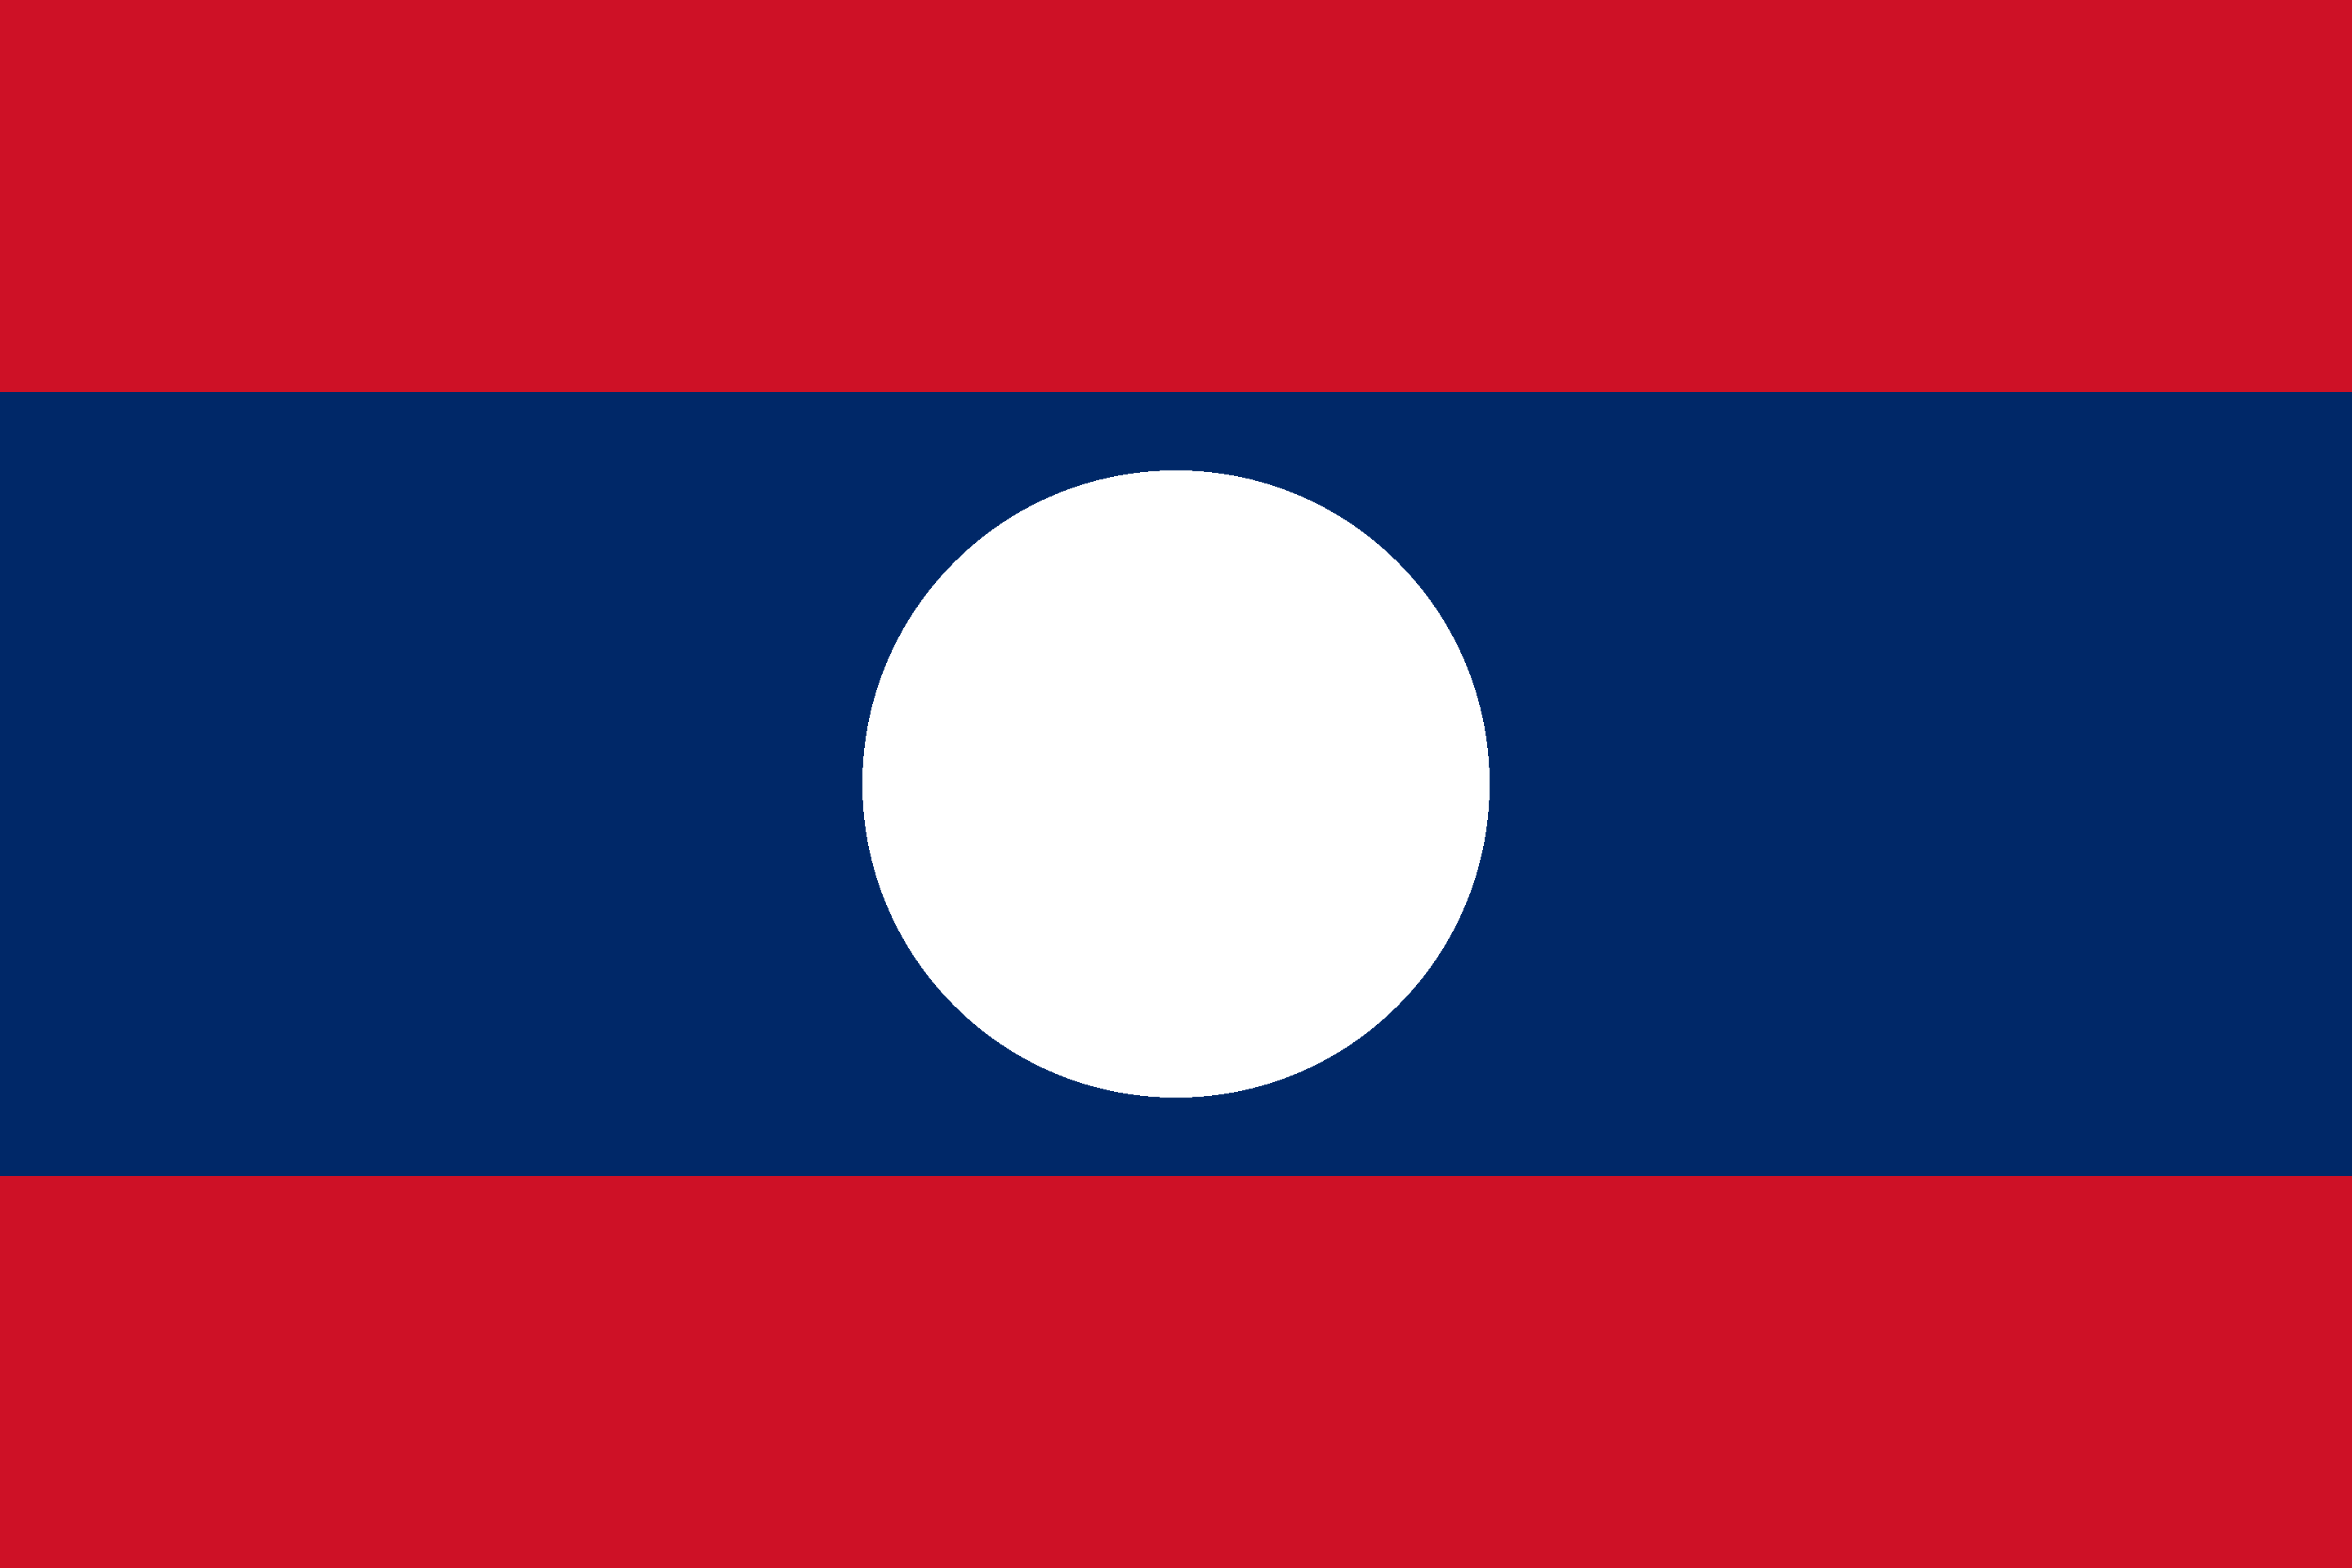 Drone Laws in Laos